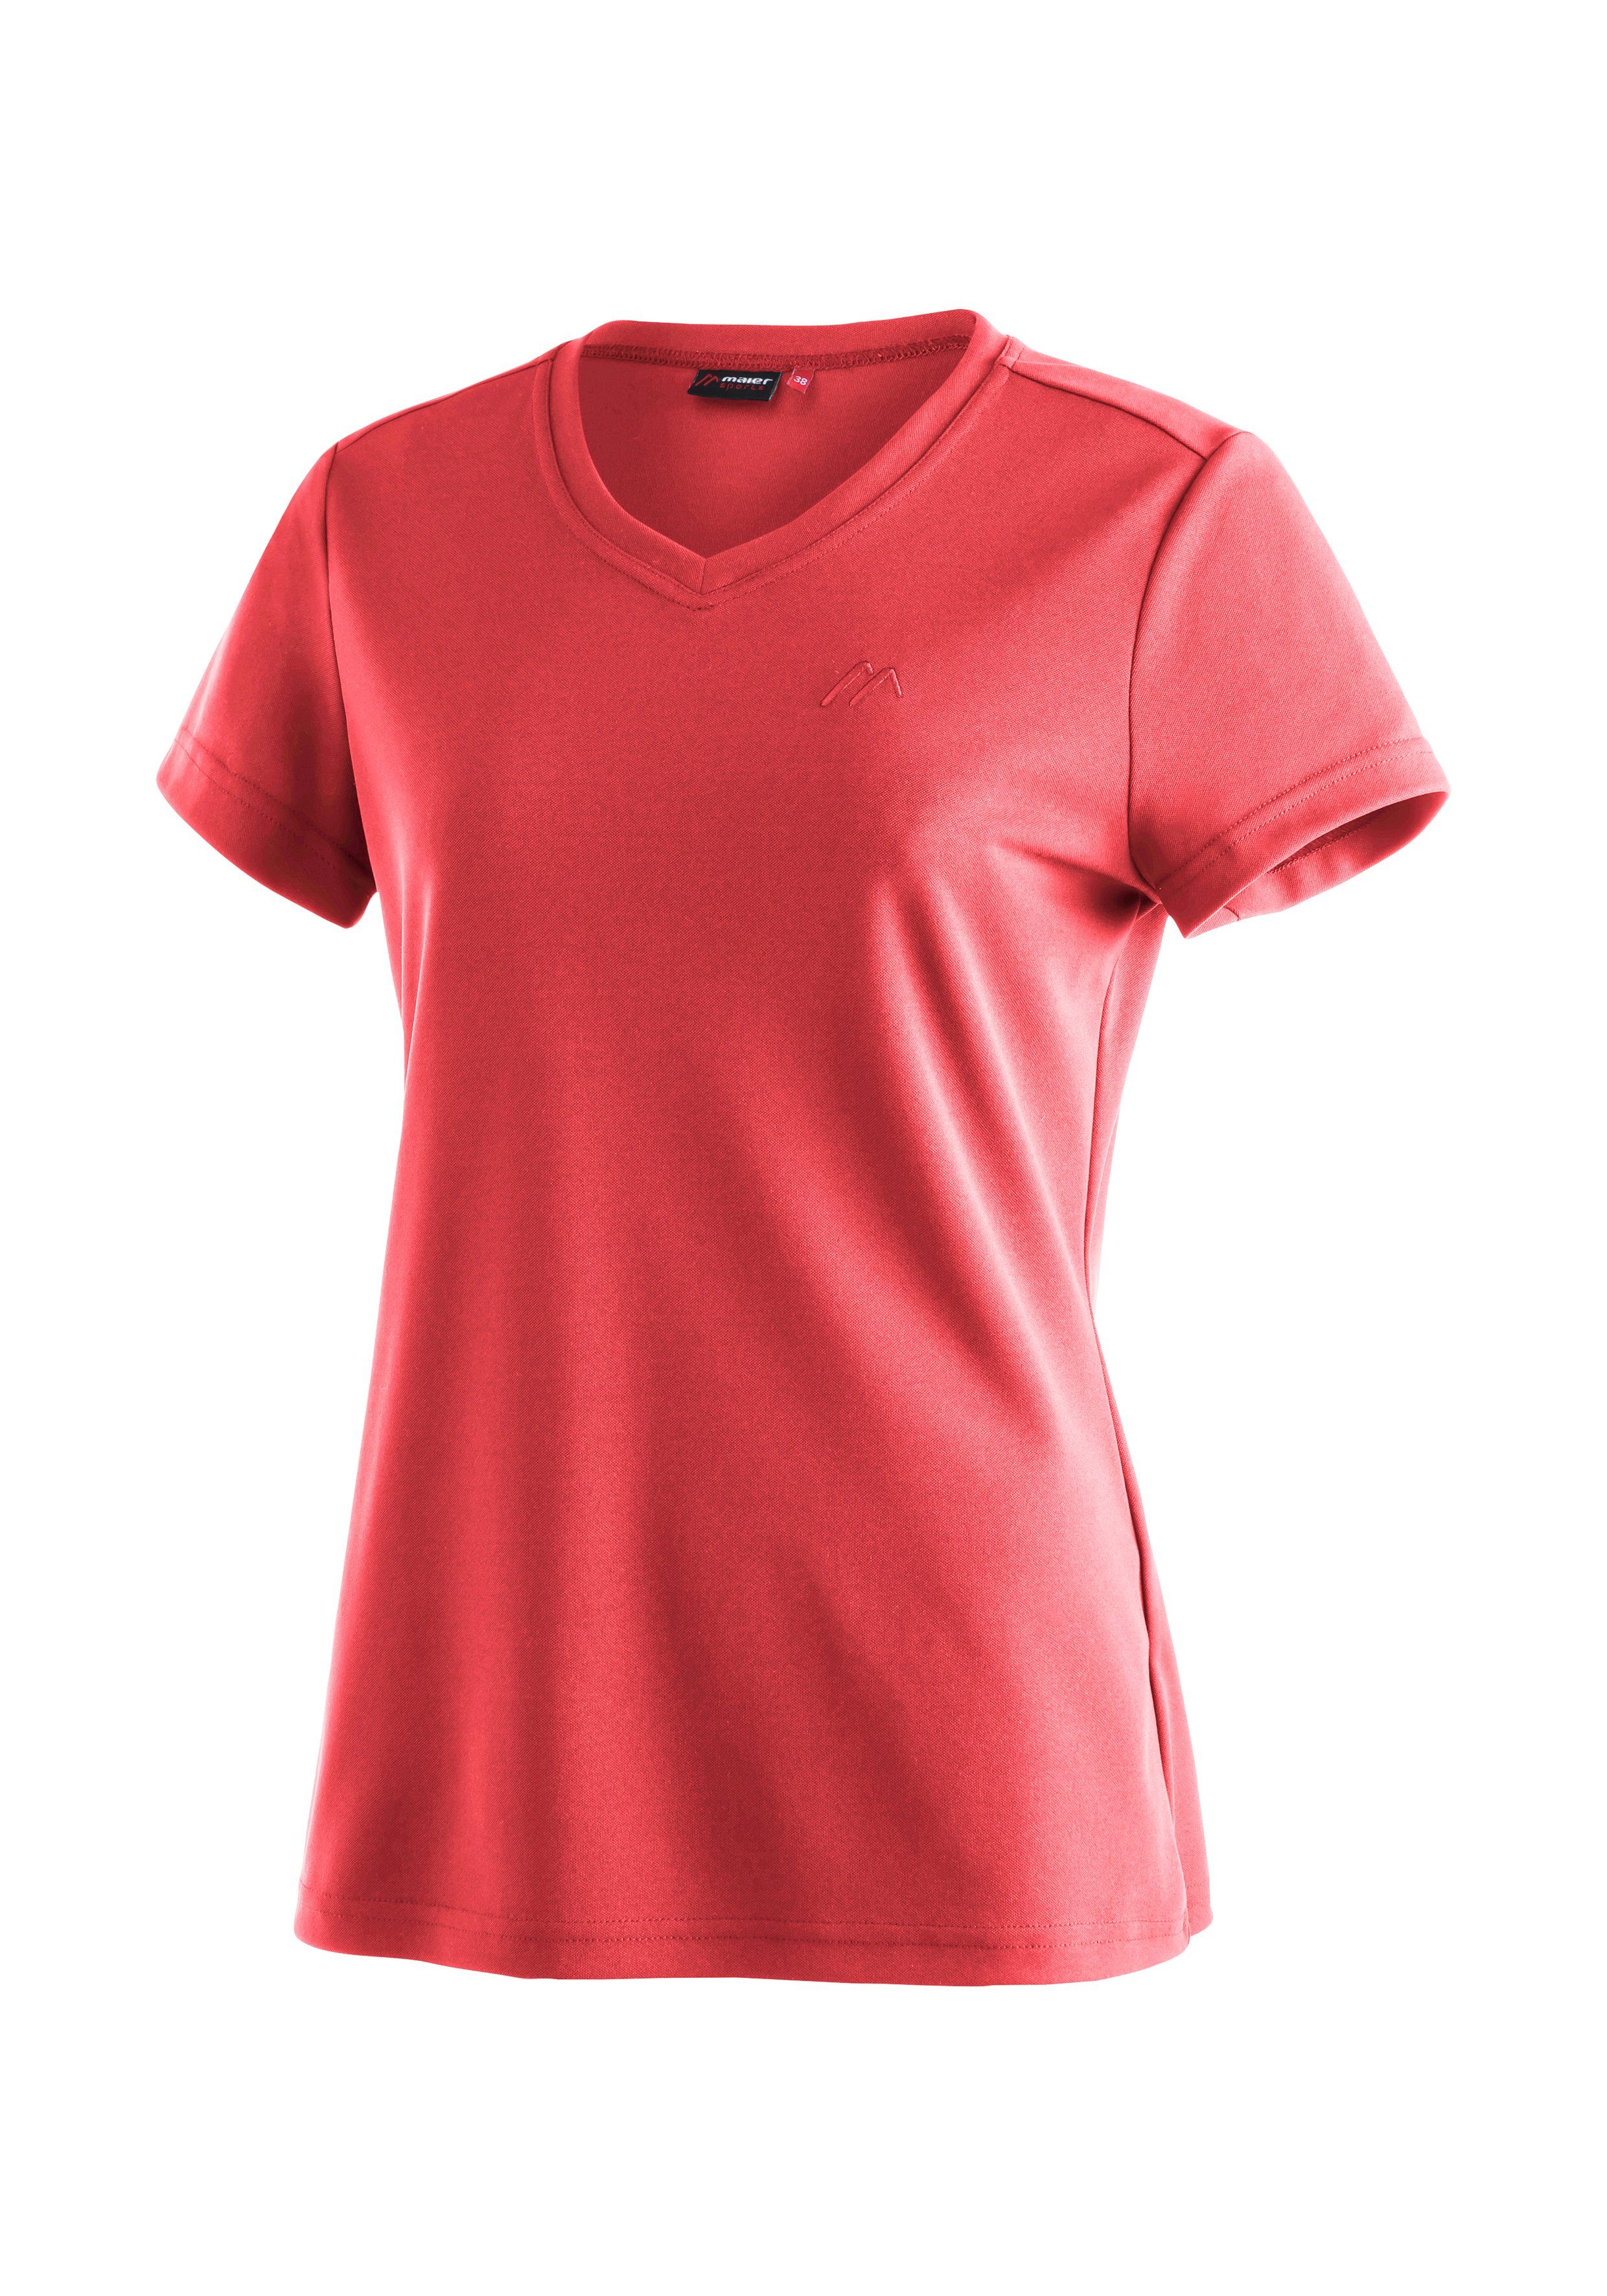 Maier Sports Funktionsshirt Trudy Damen T-Shirt, Kurzarmshirt für Wandern und Freizeit hellrot